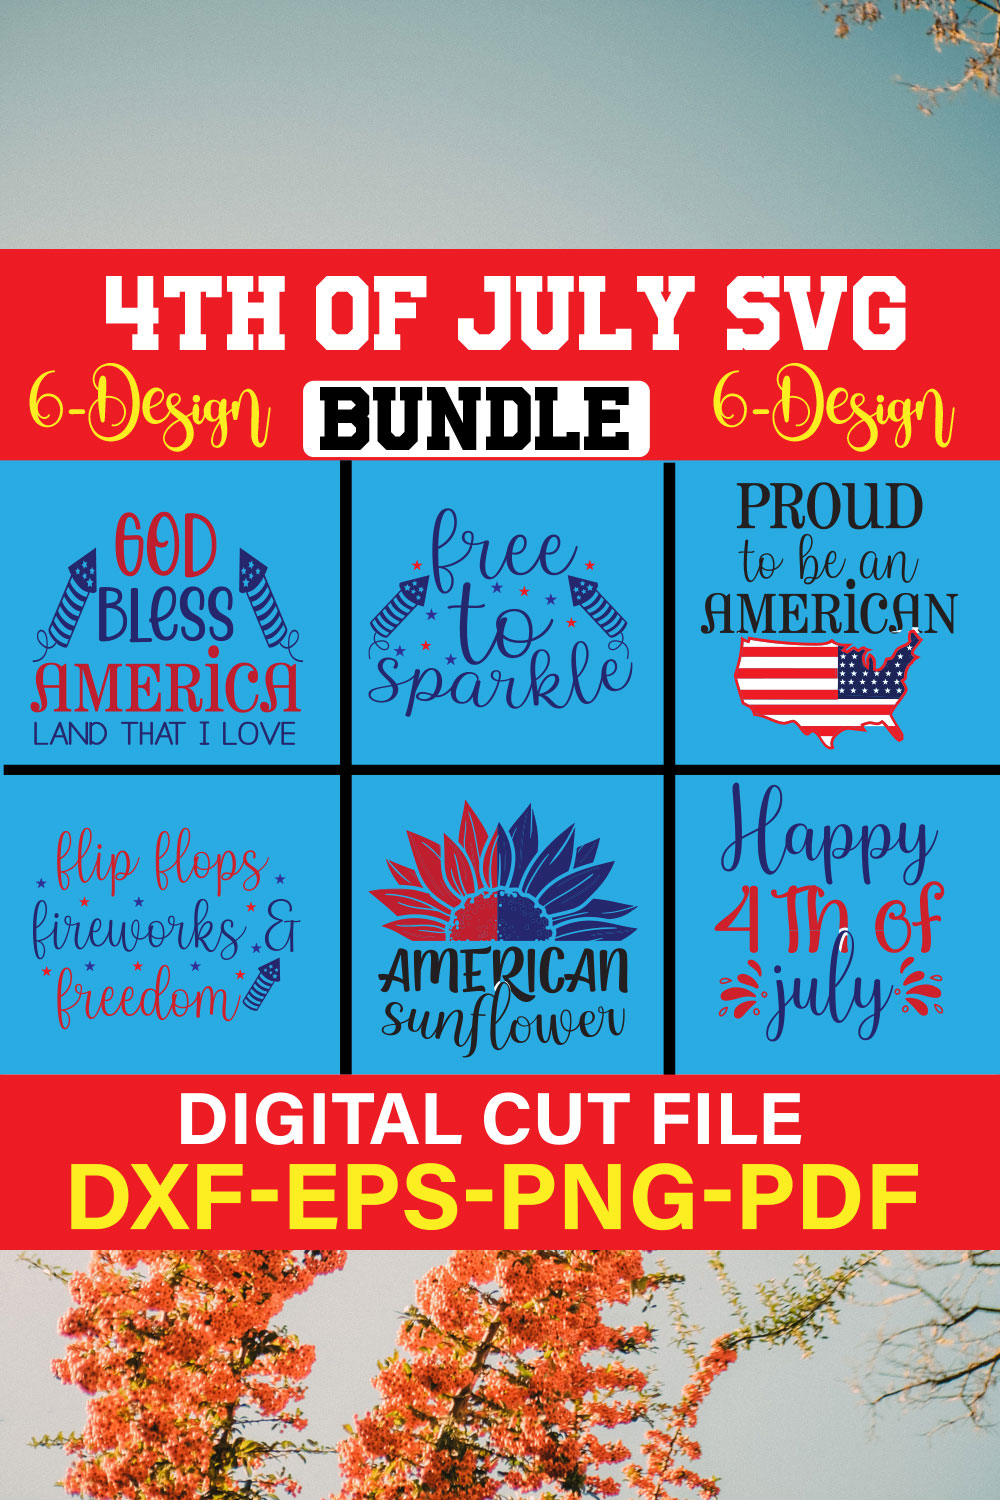 4th of July SVG Bundle Vol-1 pinterest preview image.